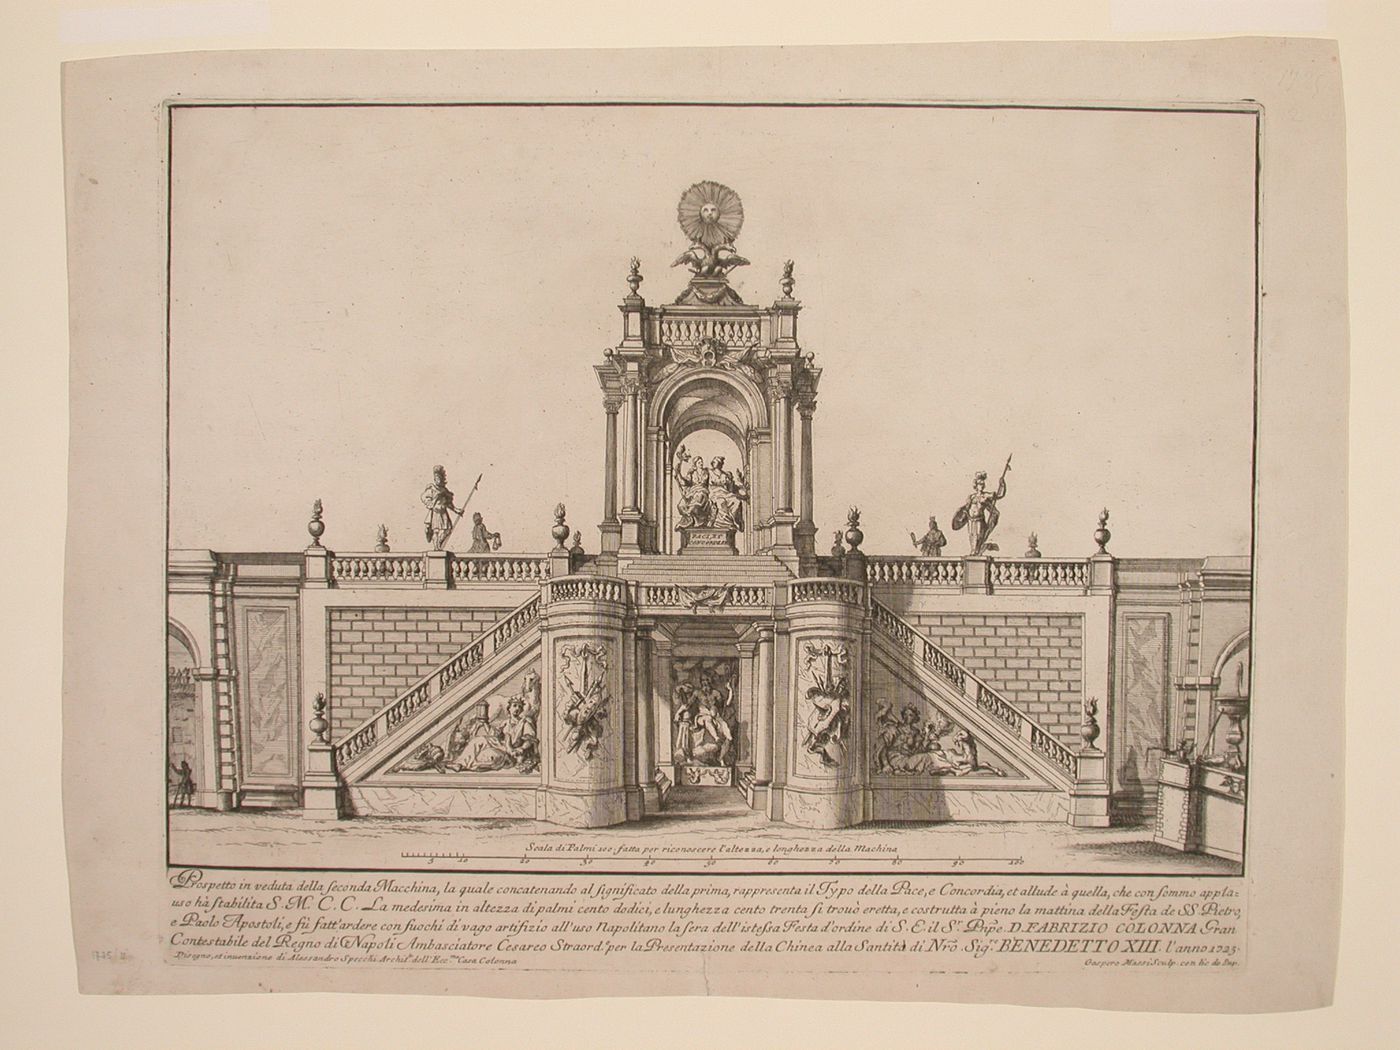 Etching of Specchi's design for the "seconda macchina" of 1725